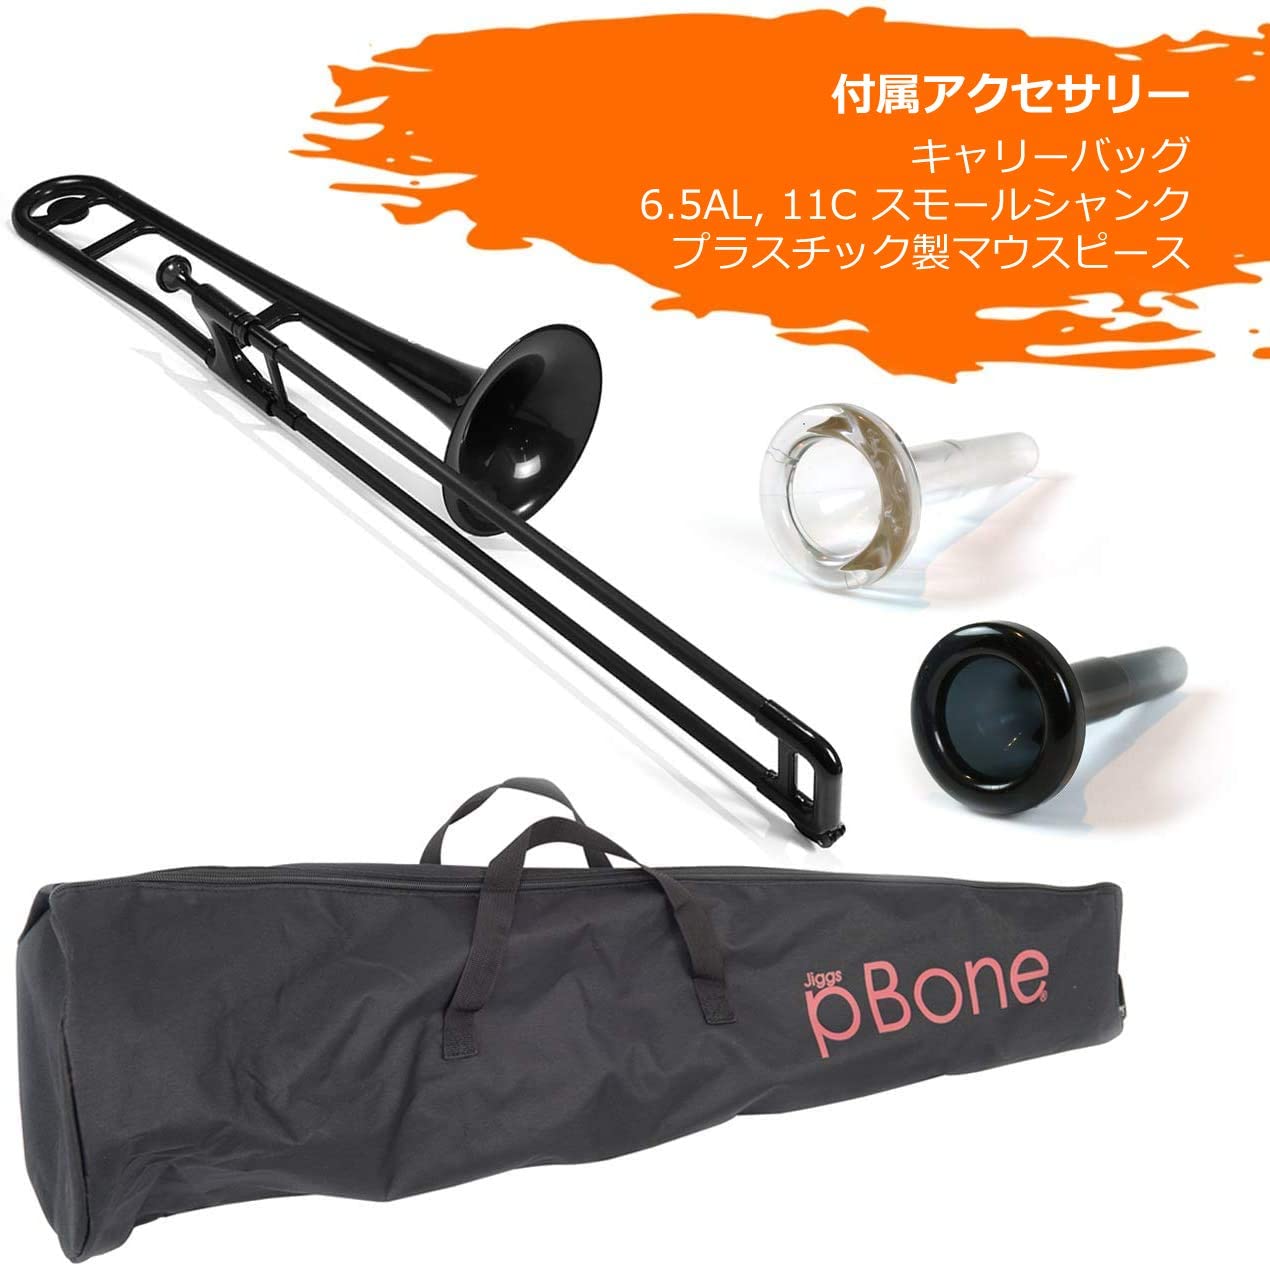 pInstruments プラスチック製管楽器 Bb マウスピース バイオコート抗菌 ブラック pBONE キャリーバッグ付属 軽量高耐久